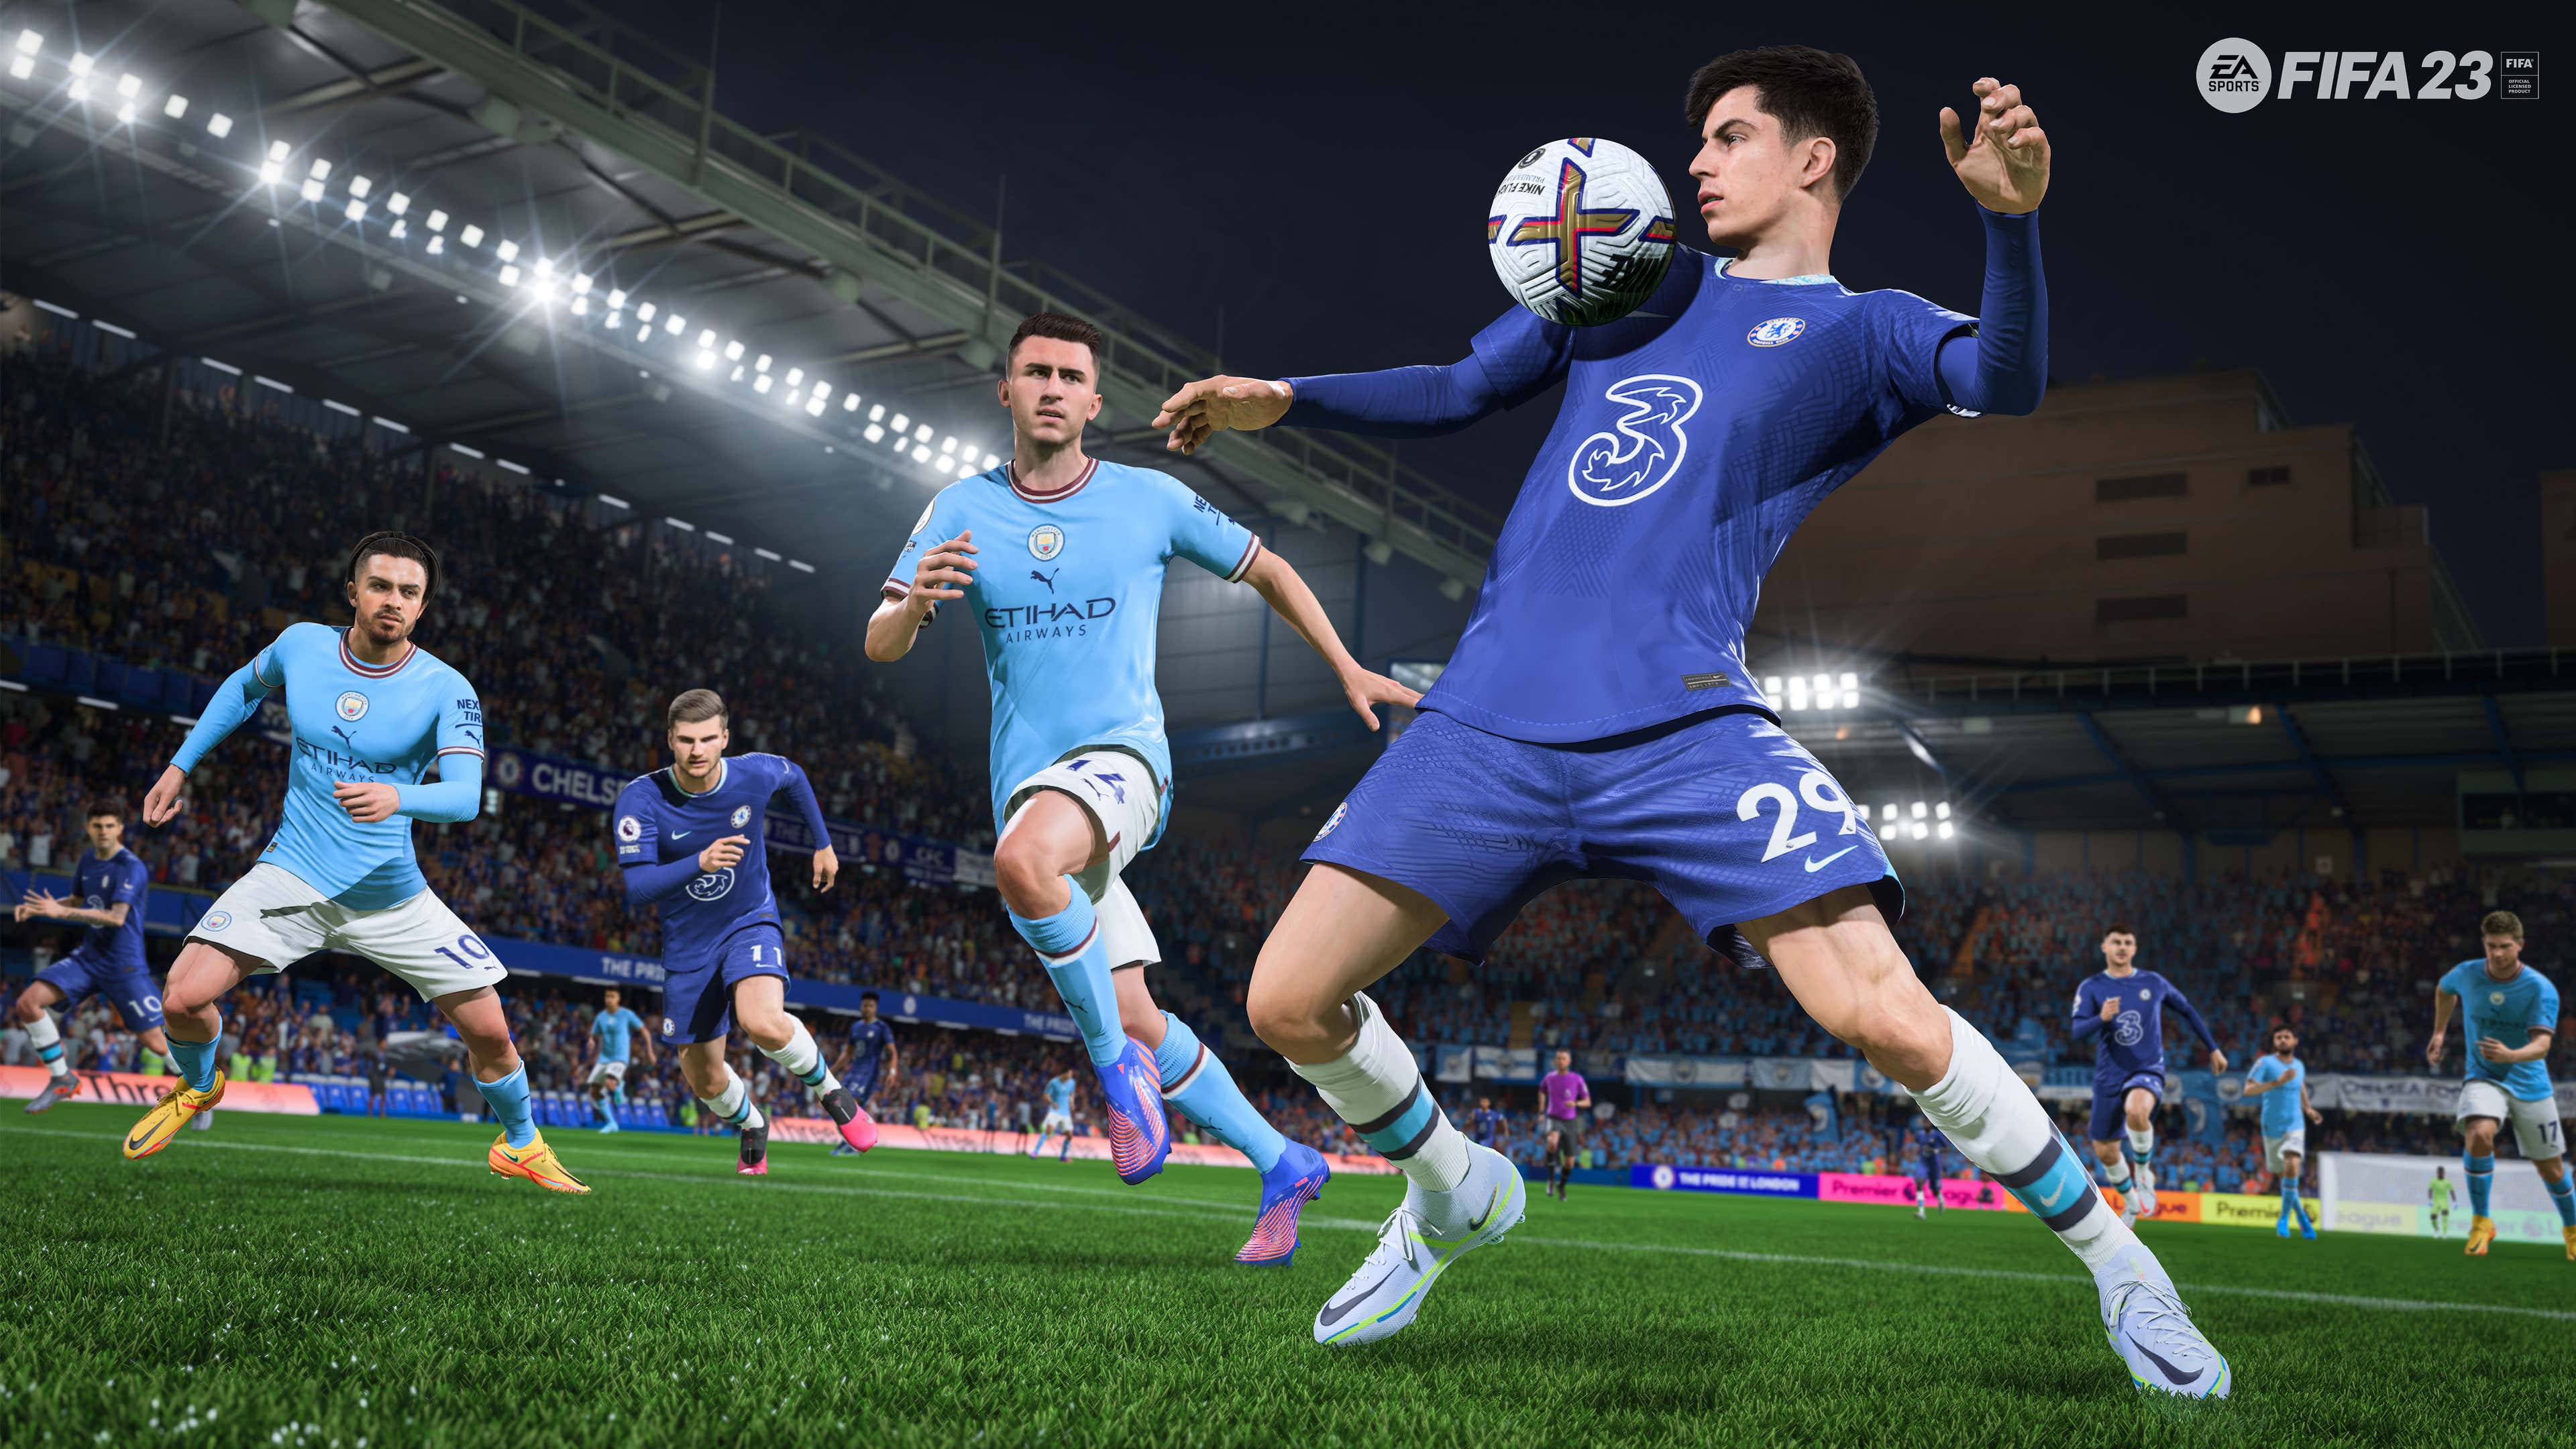 EA Sports FC 24: Web App und Companion App starten heute